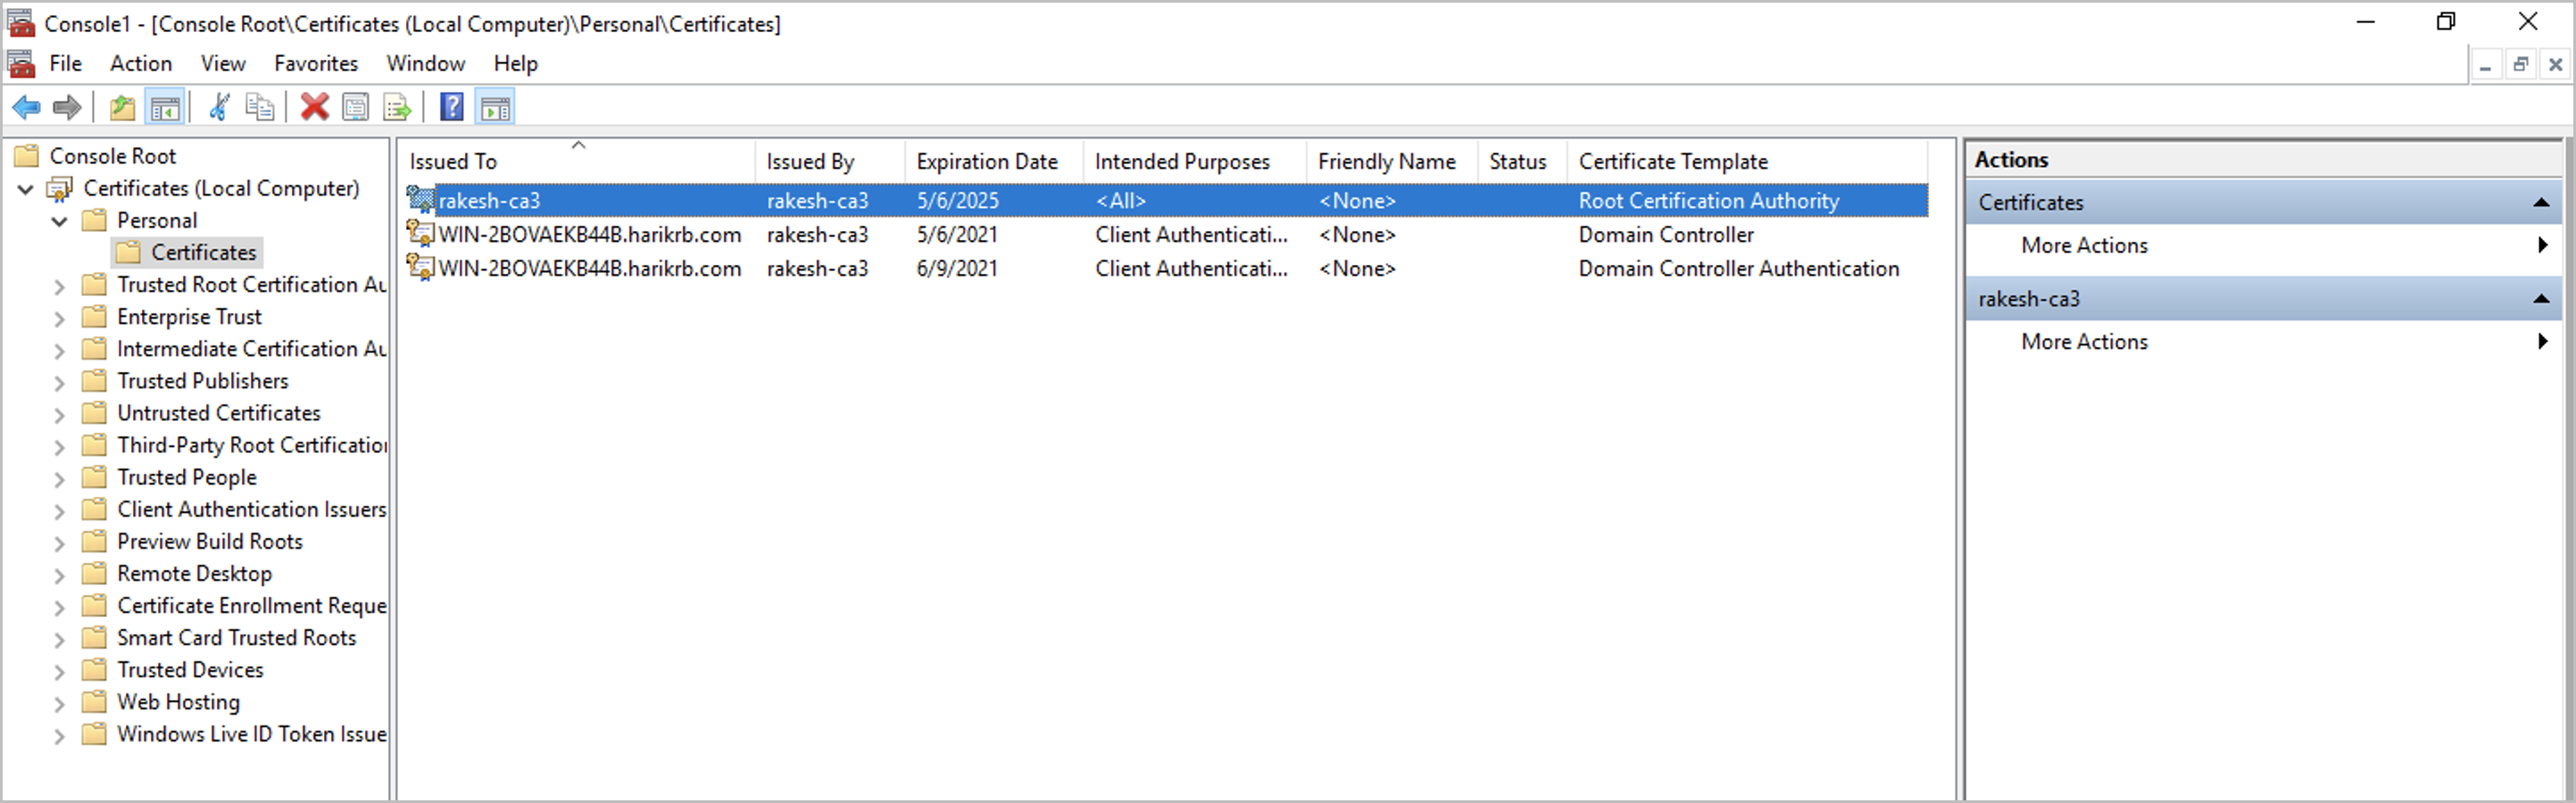 screenshot that shows personal certificates